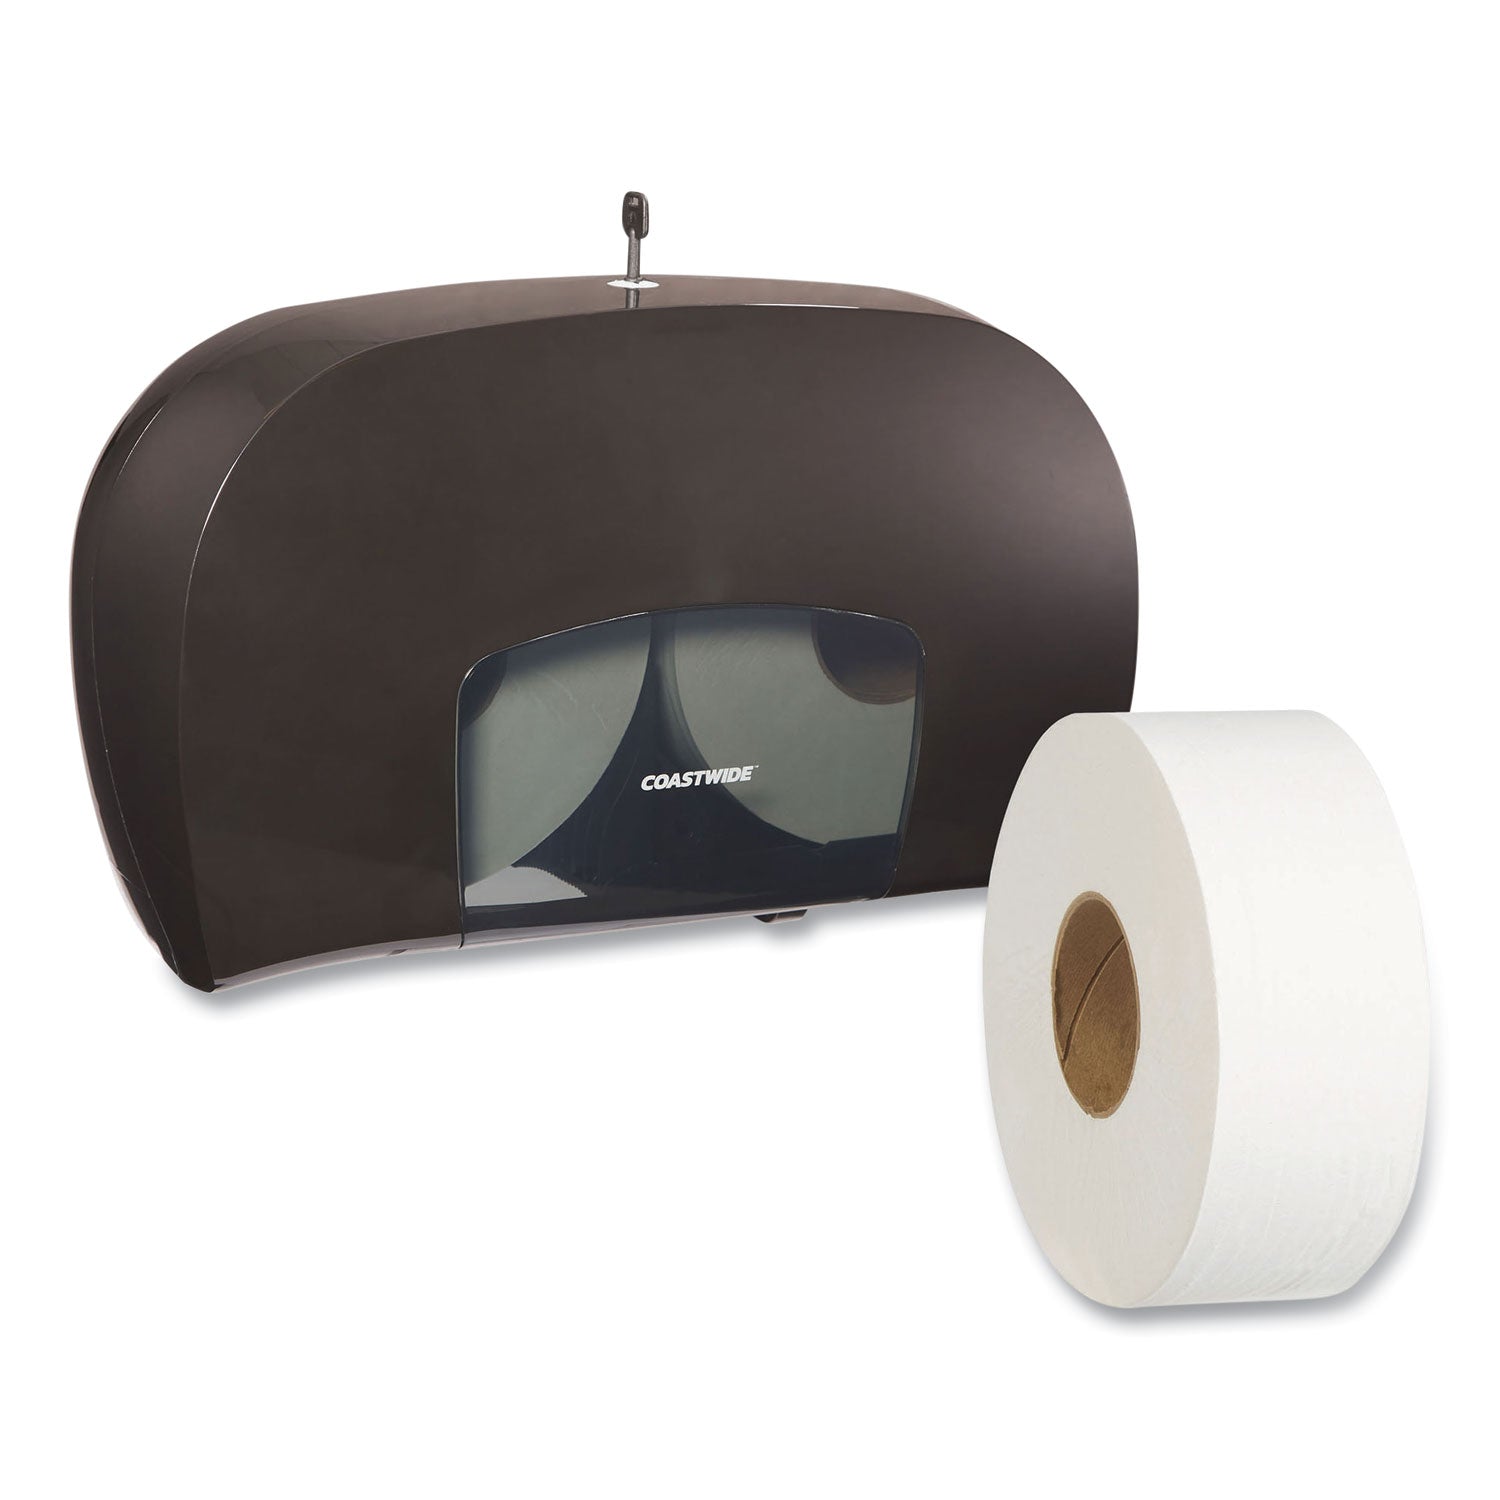 twin-jumbo-roll-toilet-paper-dispenser-2013-x-606-black_cwz60831 - 1